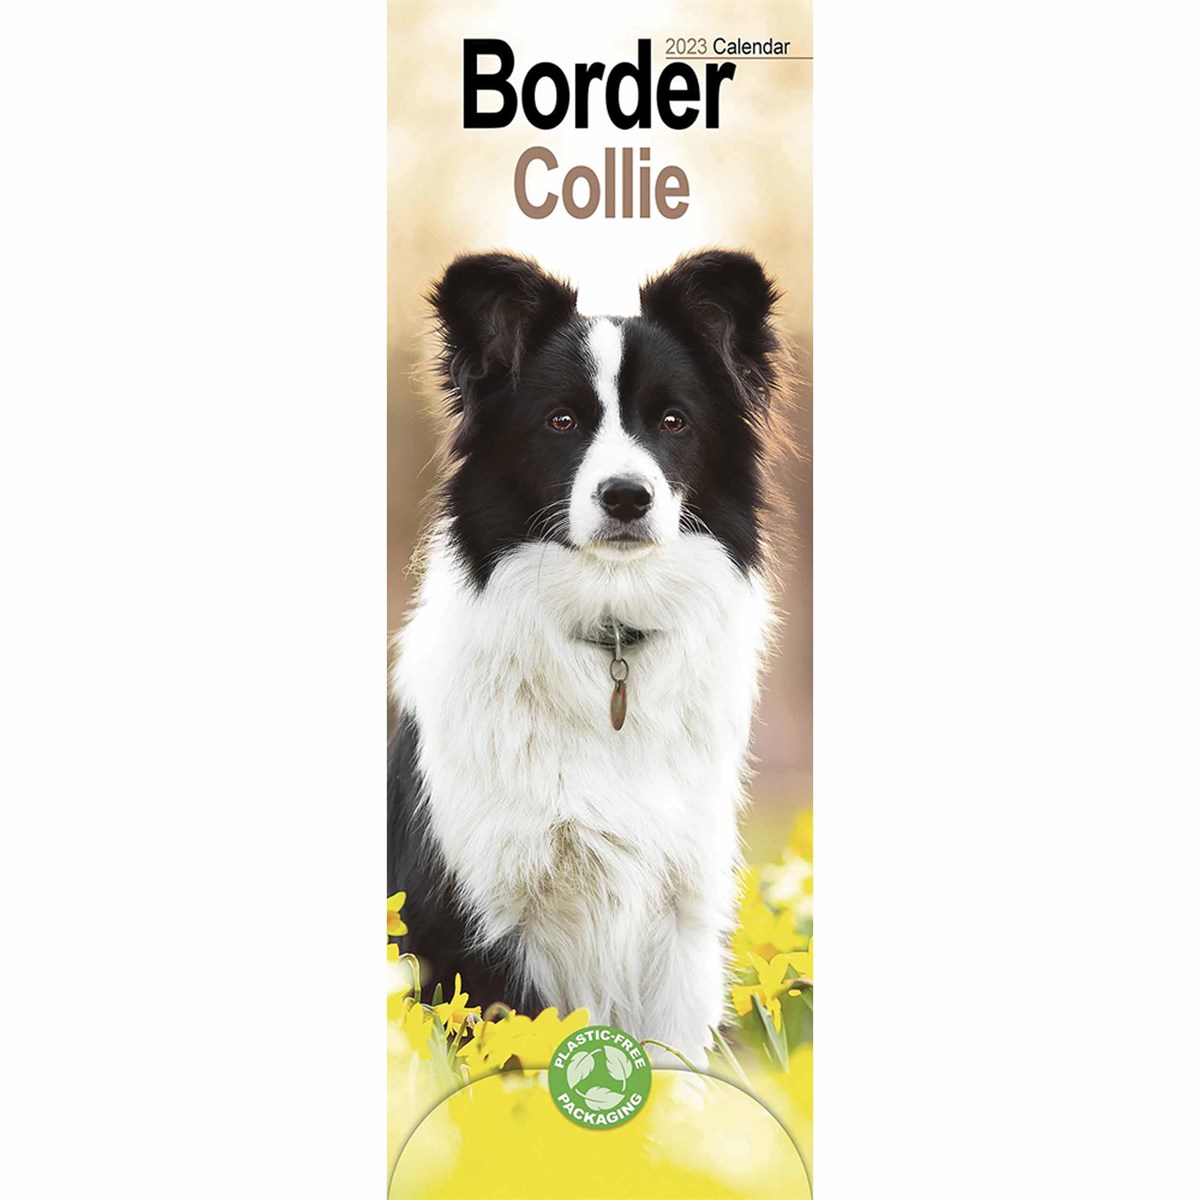 Border Collie Slim 2023 Calendars